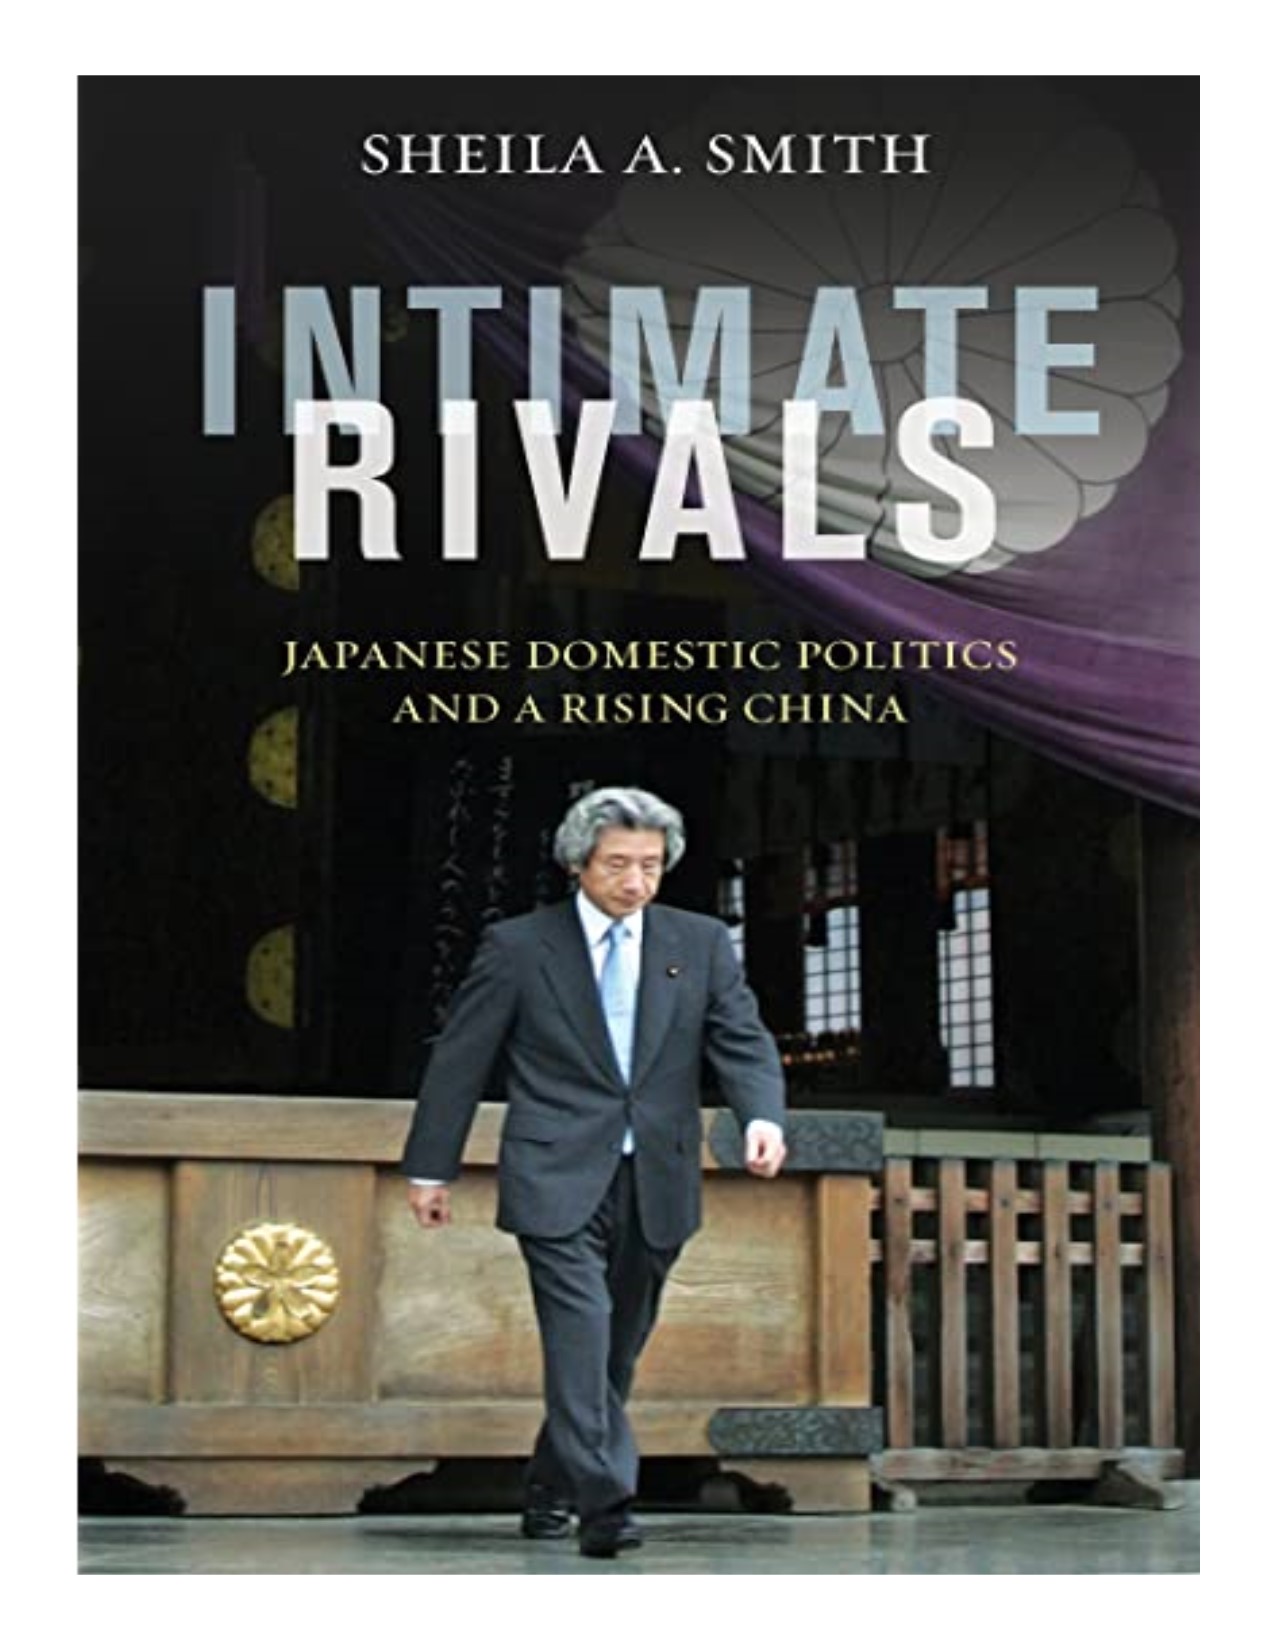 Intimate rivals Japanese domestic politics and a rising China